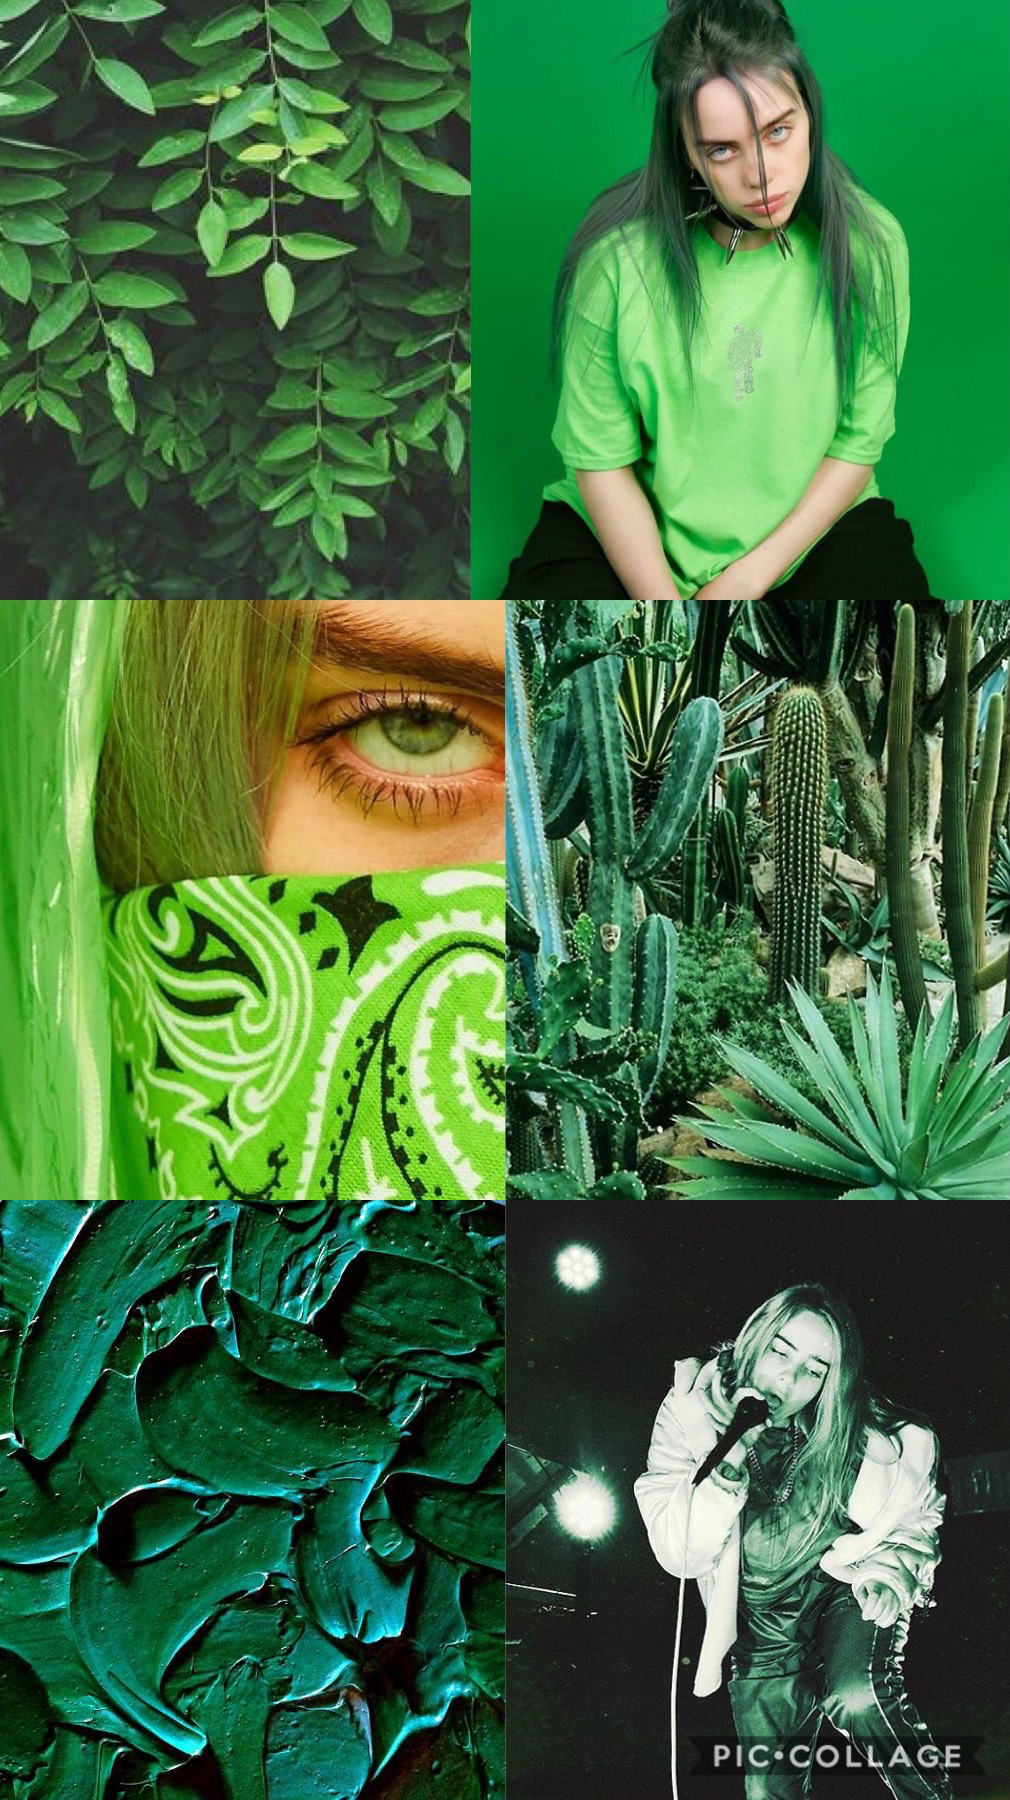 Green Eilish #BillieEilish #BillieFreakingEilish #Billie #Eilish #green